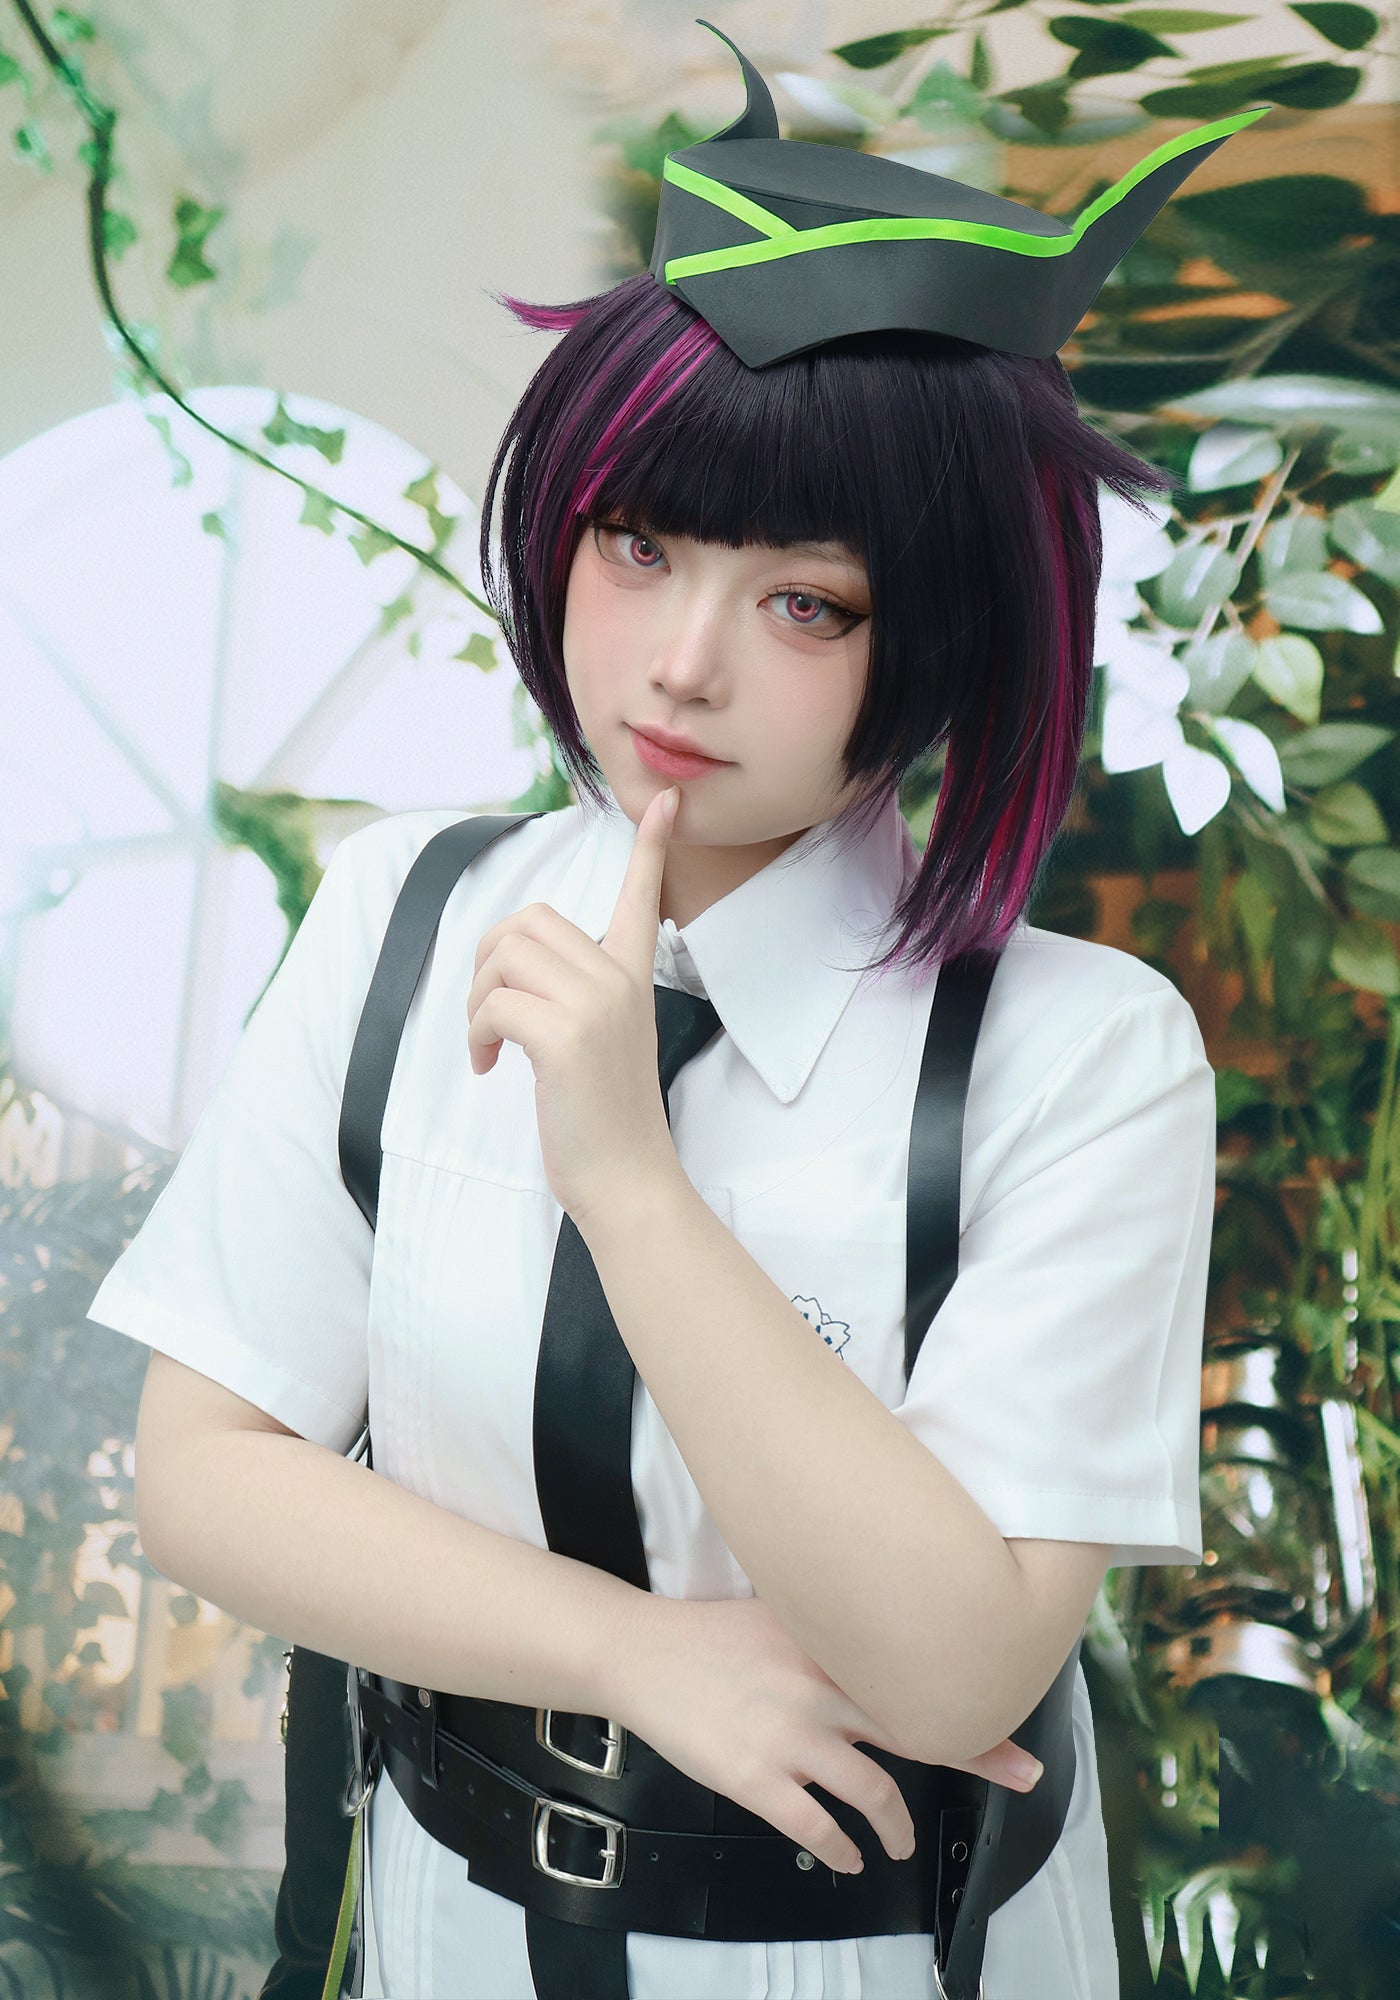 DAZCOS Lilia Vanrouge Cosplay Wig for Anime Halloween Costume (Black&amp;Pink)